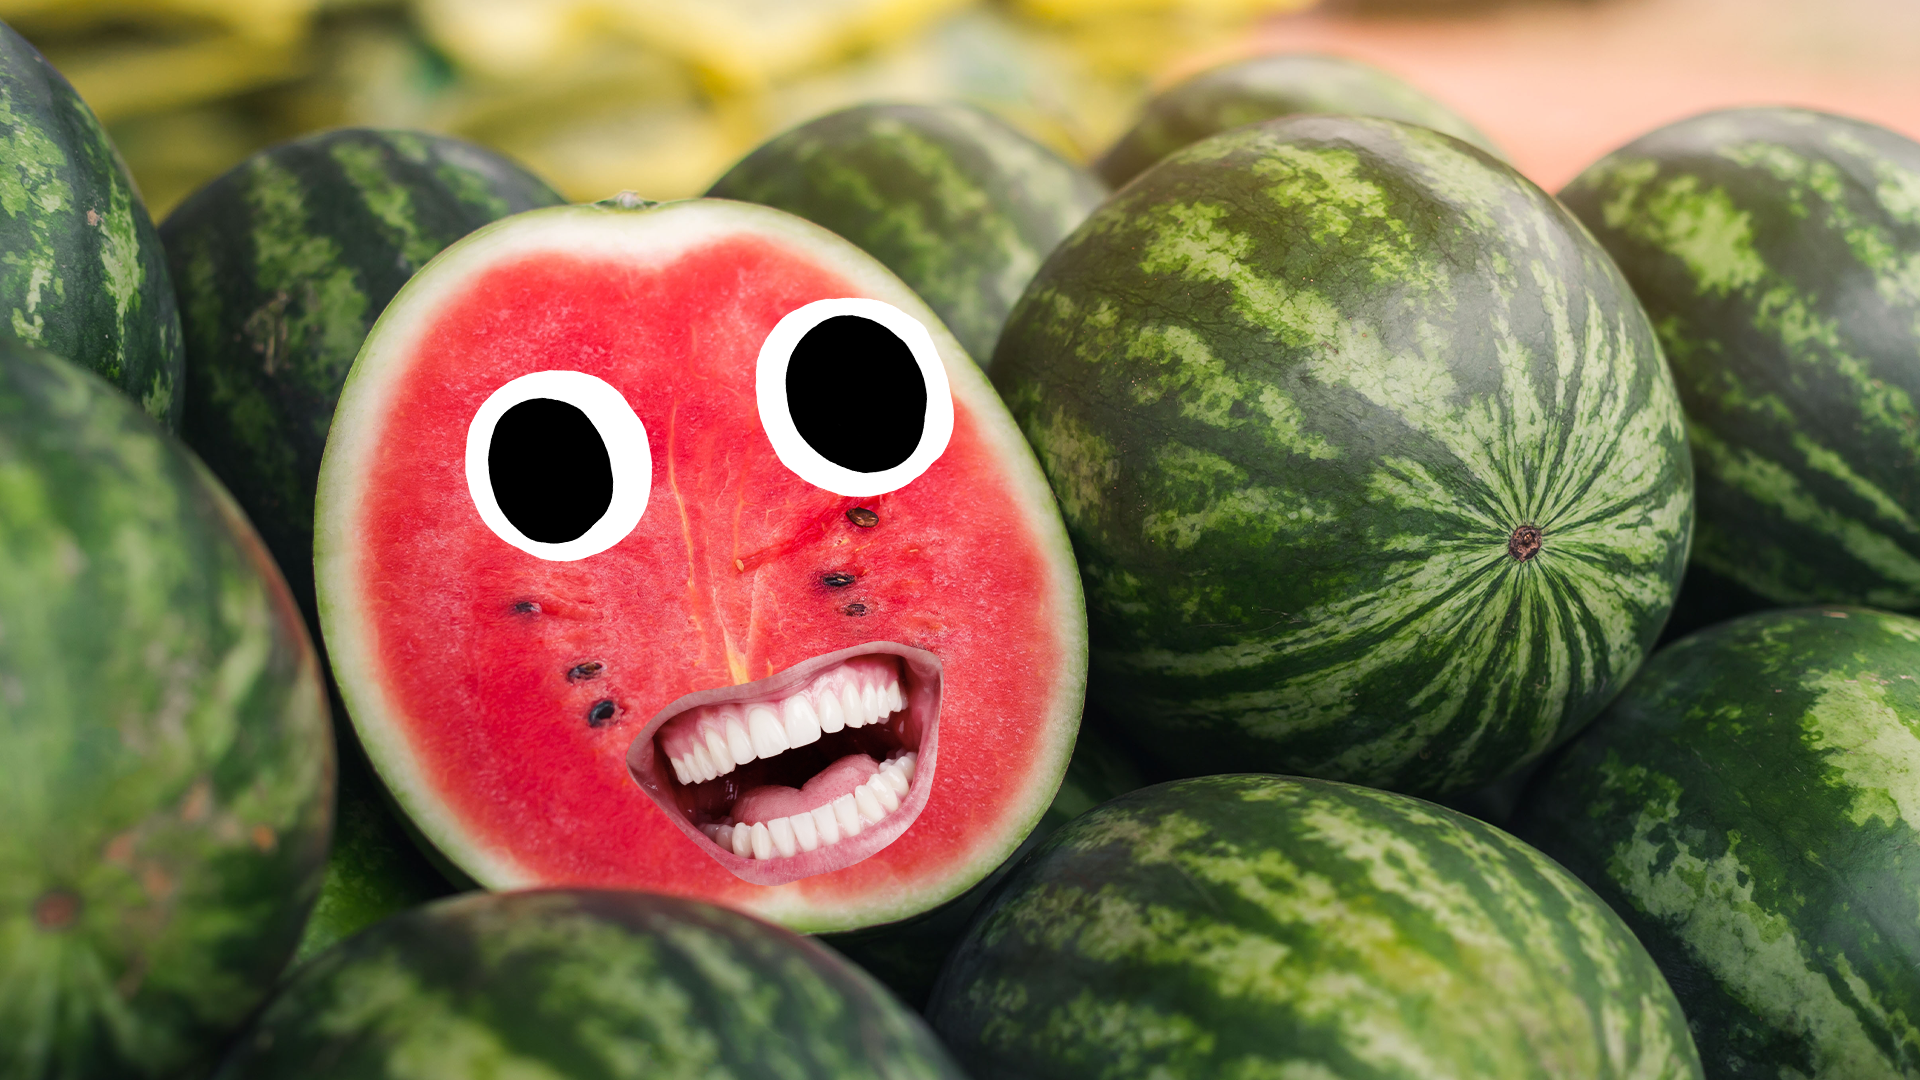 Goofy looking water melon